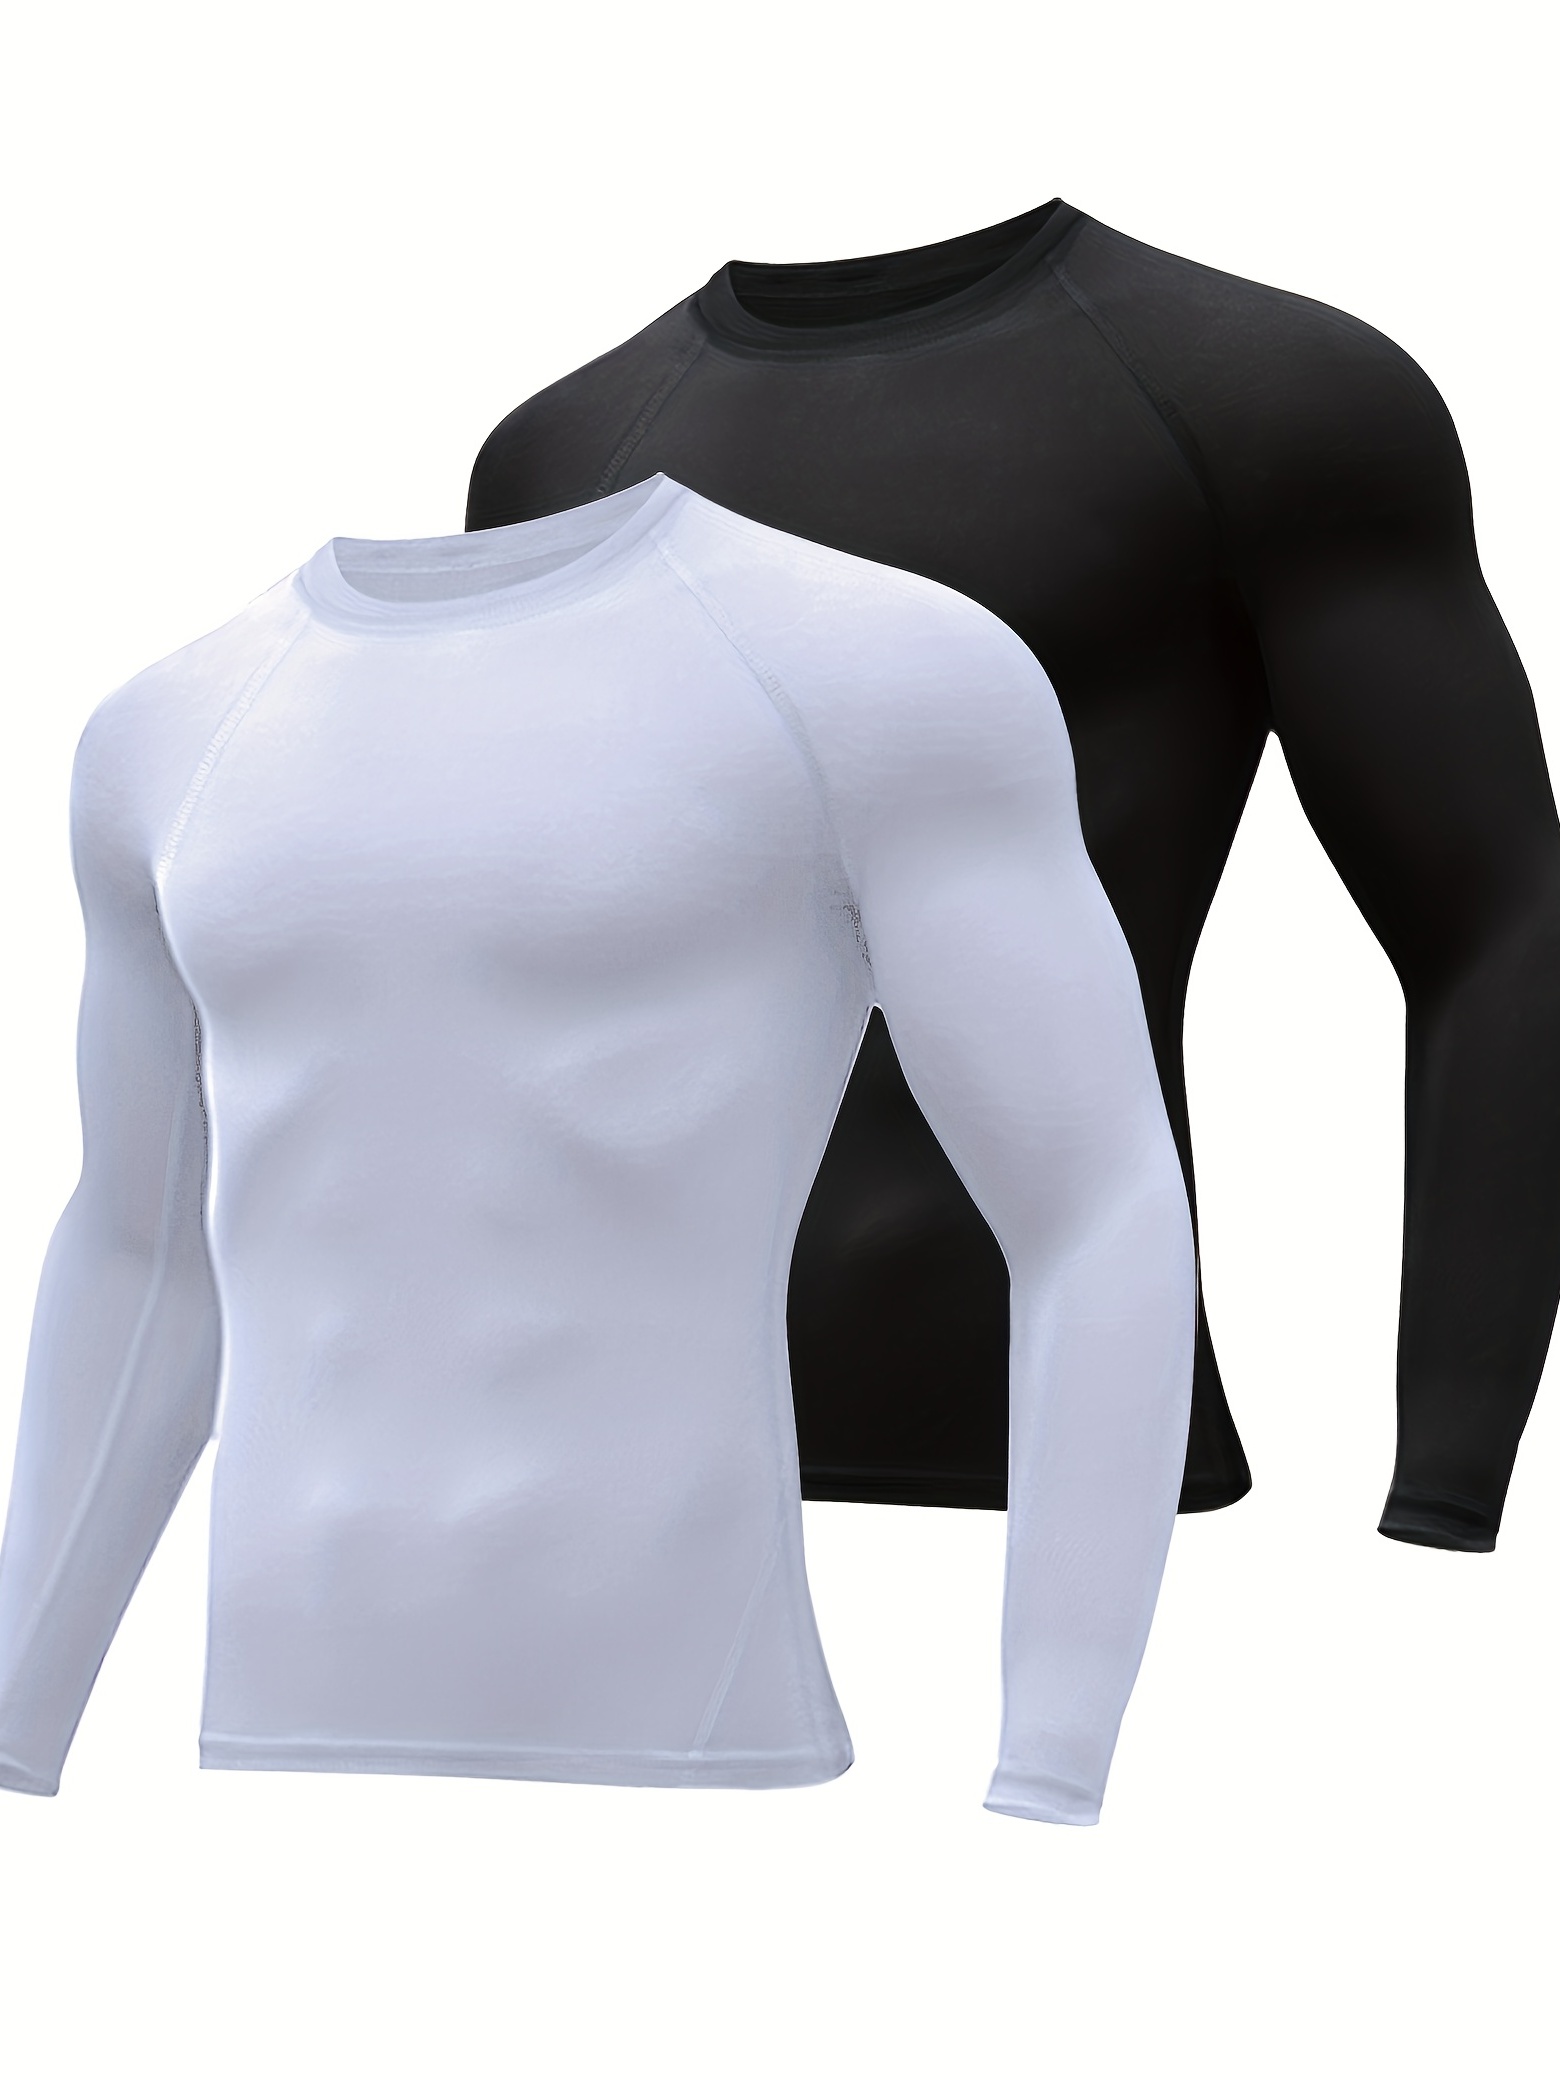 1PC Fashion Belt Crop Tuck Band Adjustable Elastic Strap Flexible Shirt  Tucking Tool Clothing Accessories